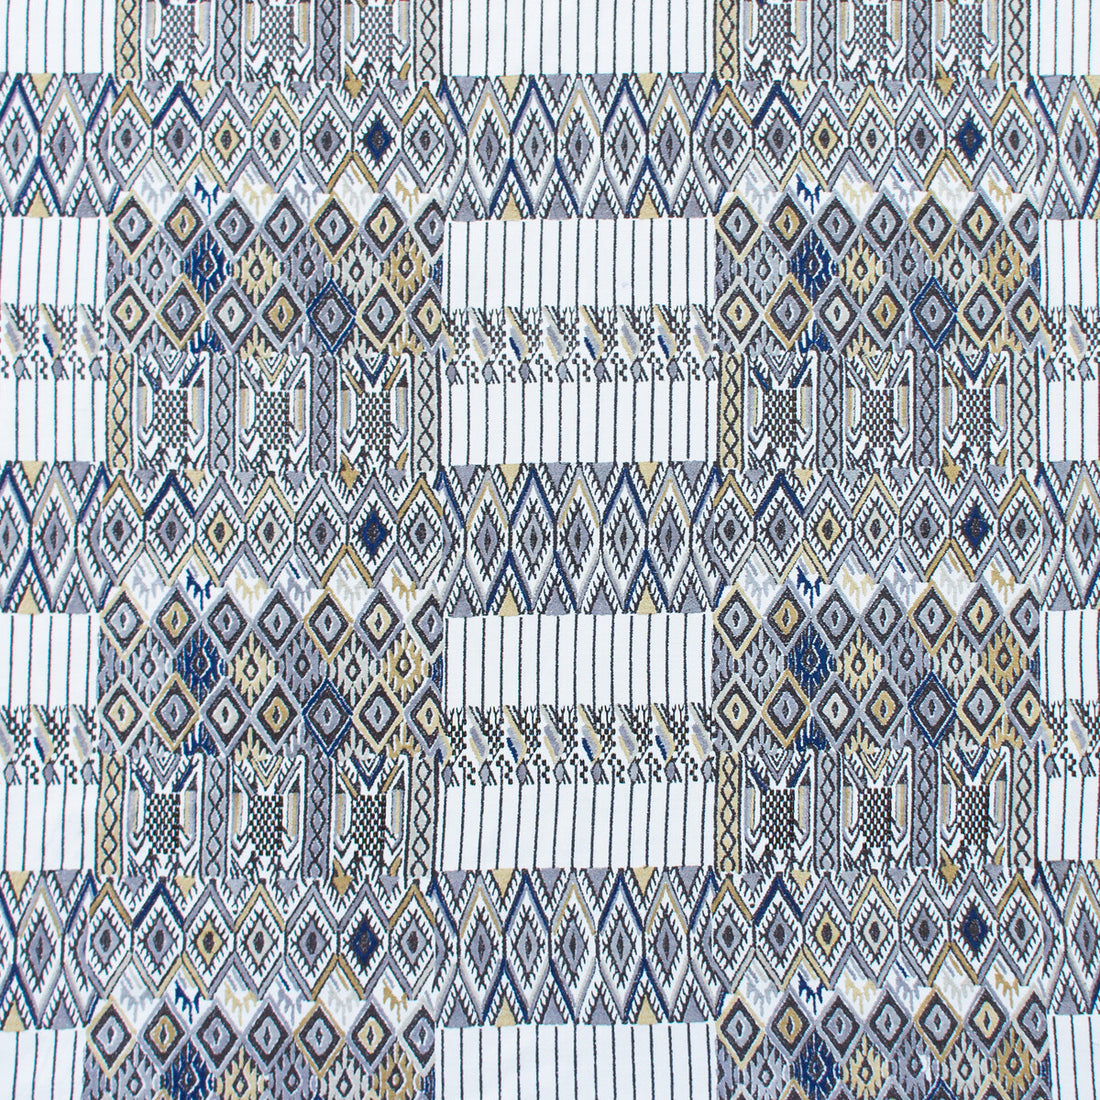 Huipil fabric in marron color - pattern GDT5564.002.0 - by Gaston y Daniela in the Gaston Nuevo Mundo collection